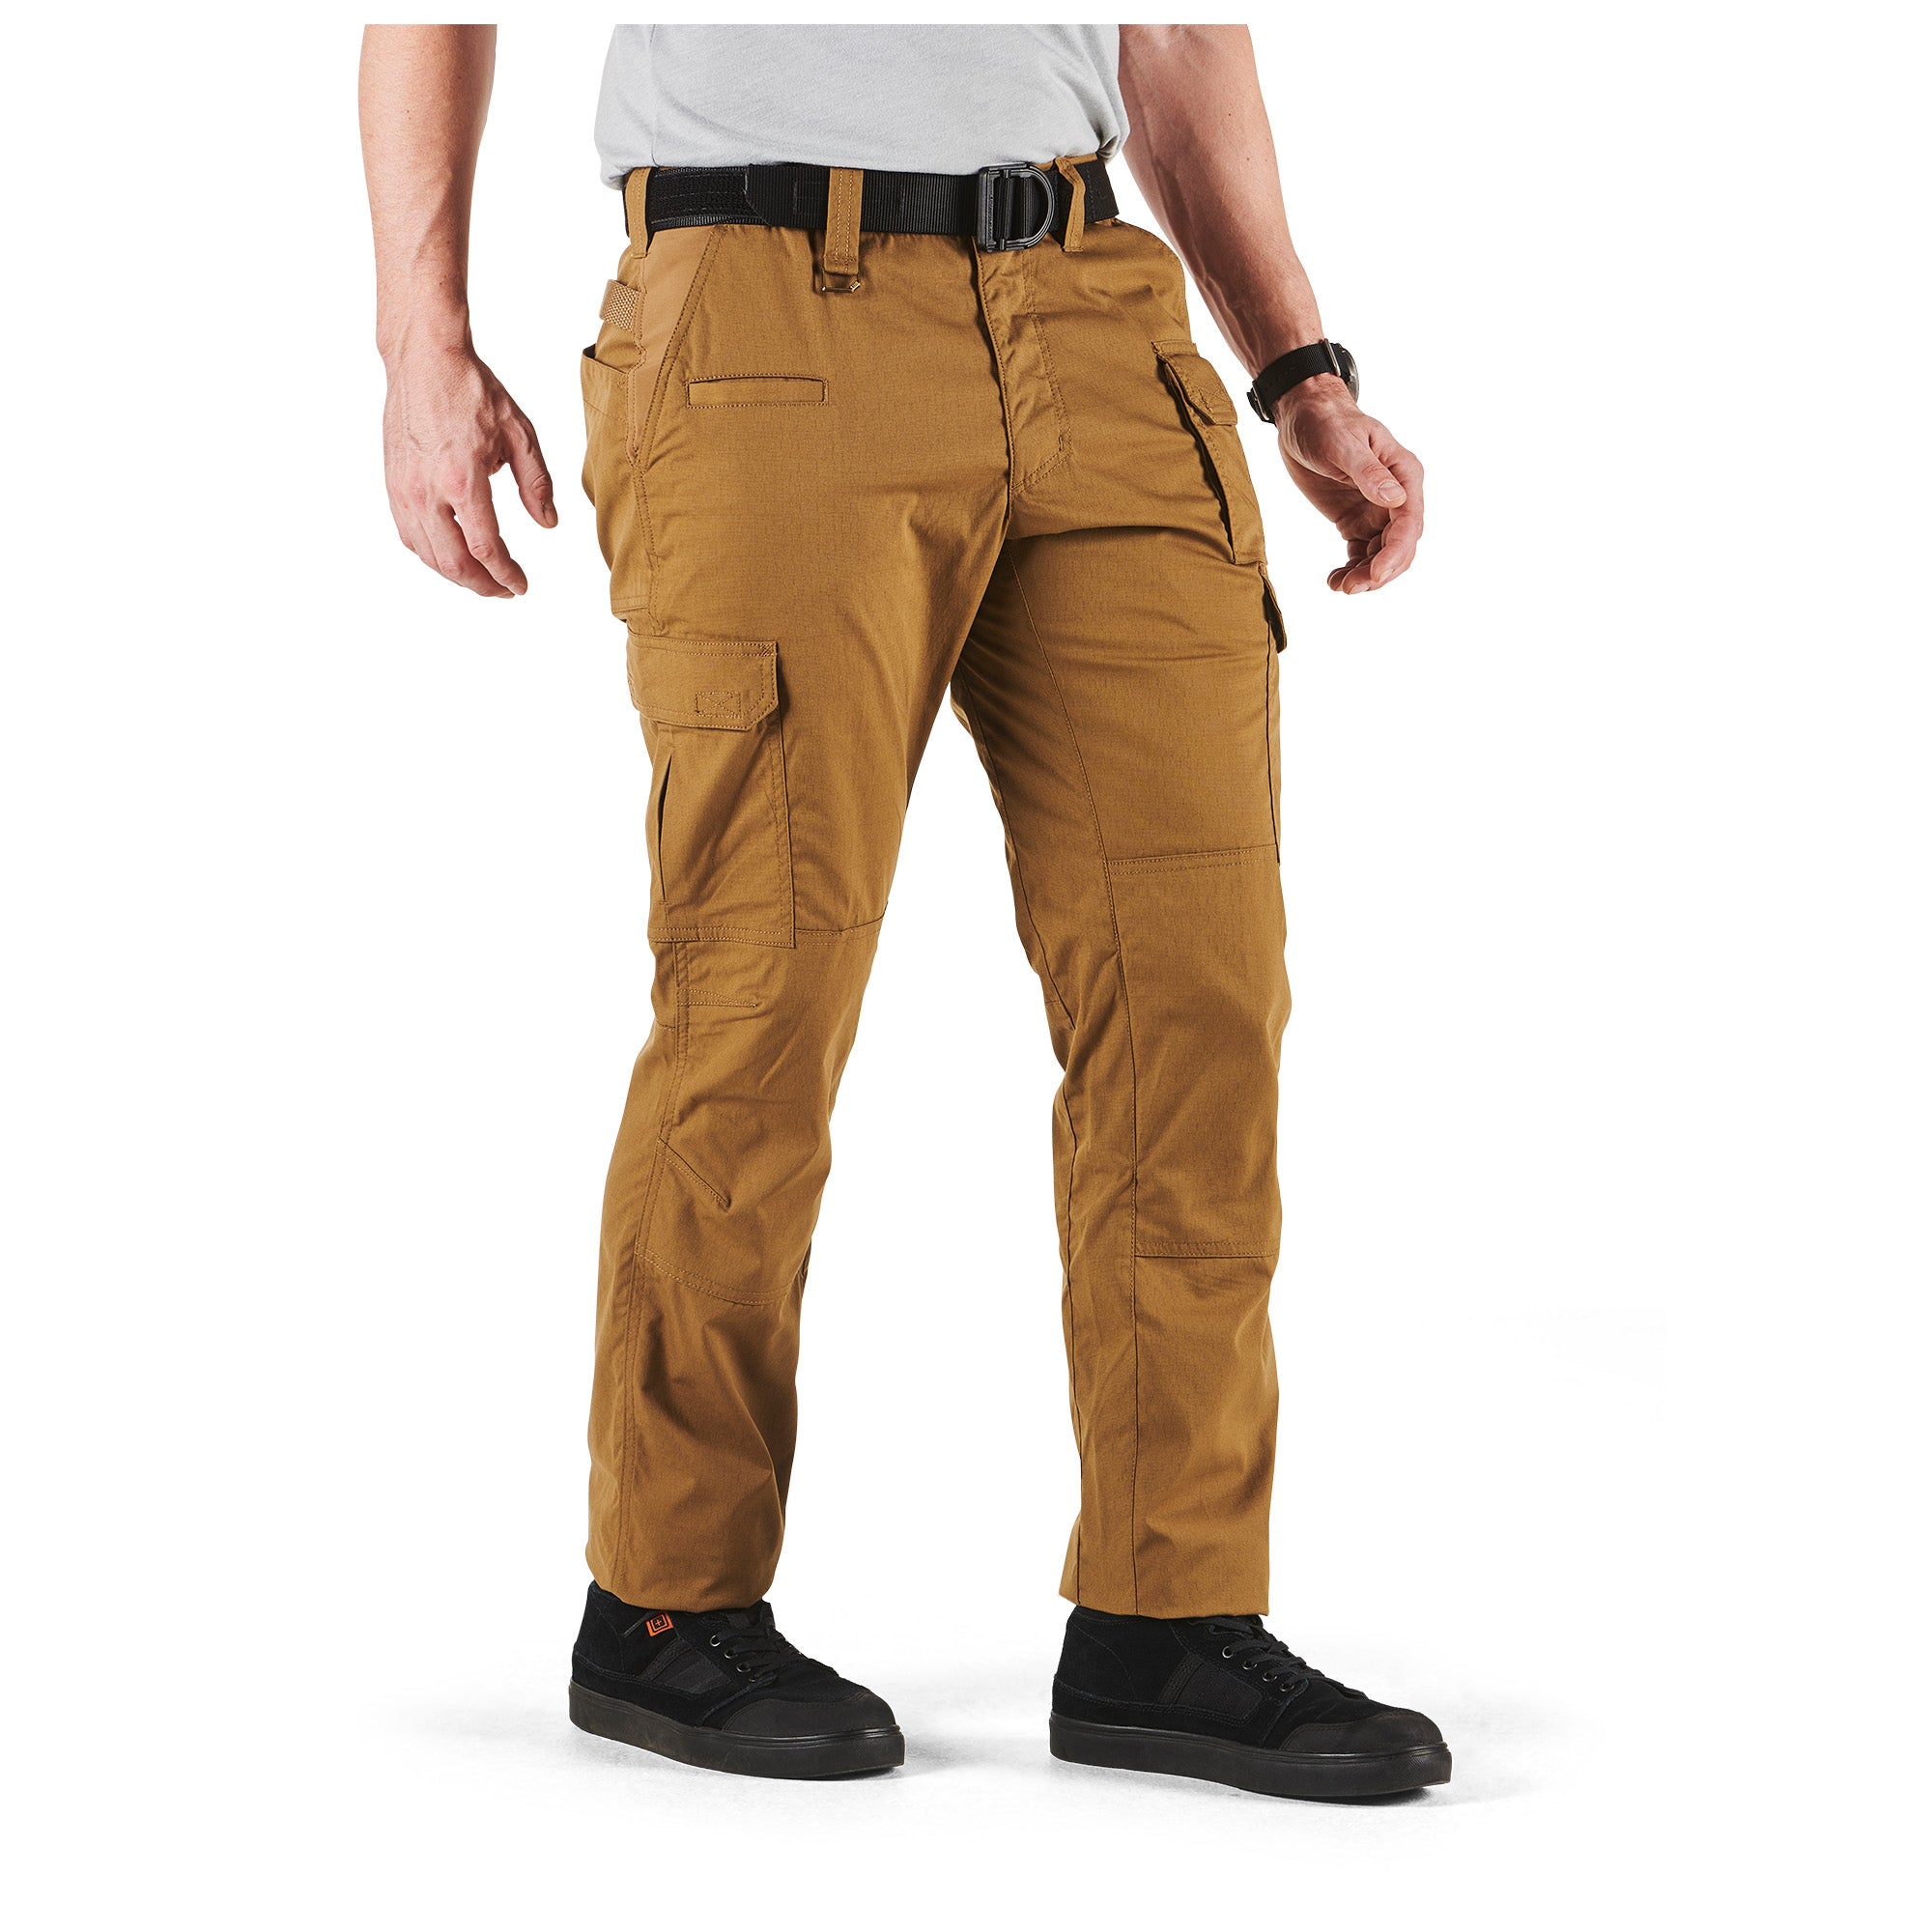 5.11 Tactical ABR Pro Pants - Kangaroo Tactical Gear Australia Supplier Distributor Dealer